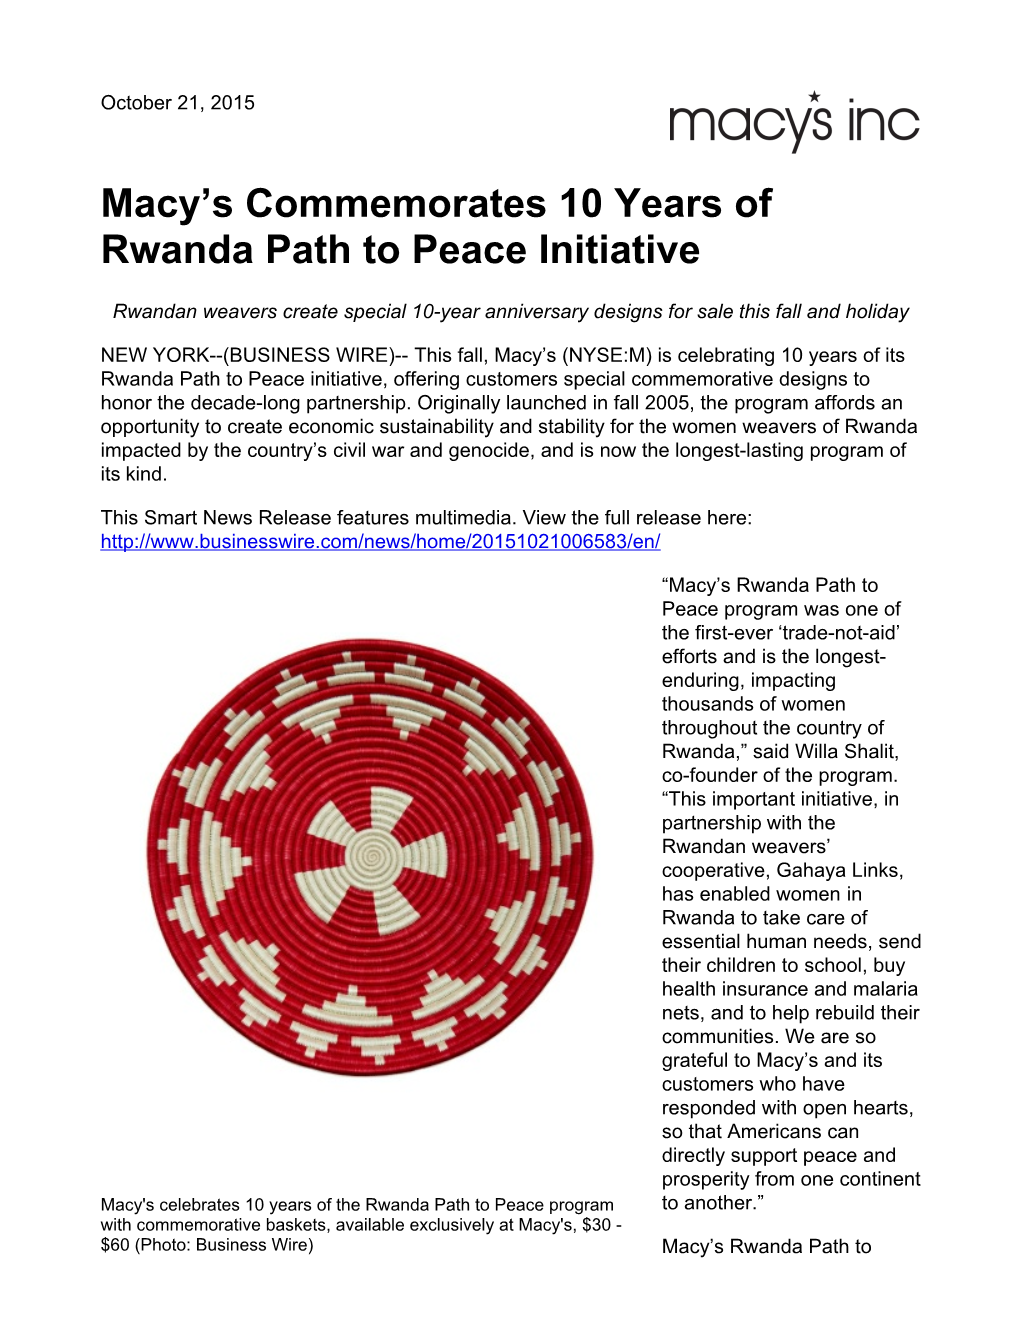 Macy's Commemorates 10 Years of Rwanda Path to Peace Initiative